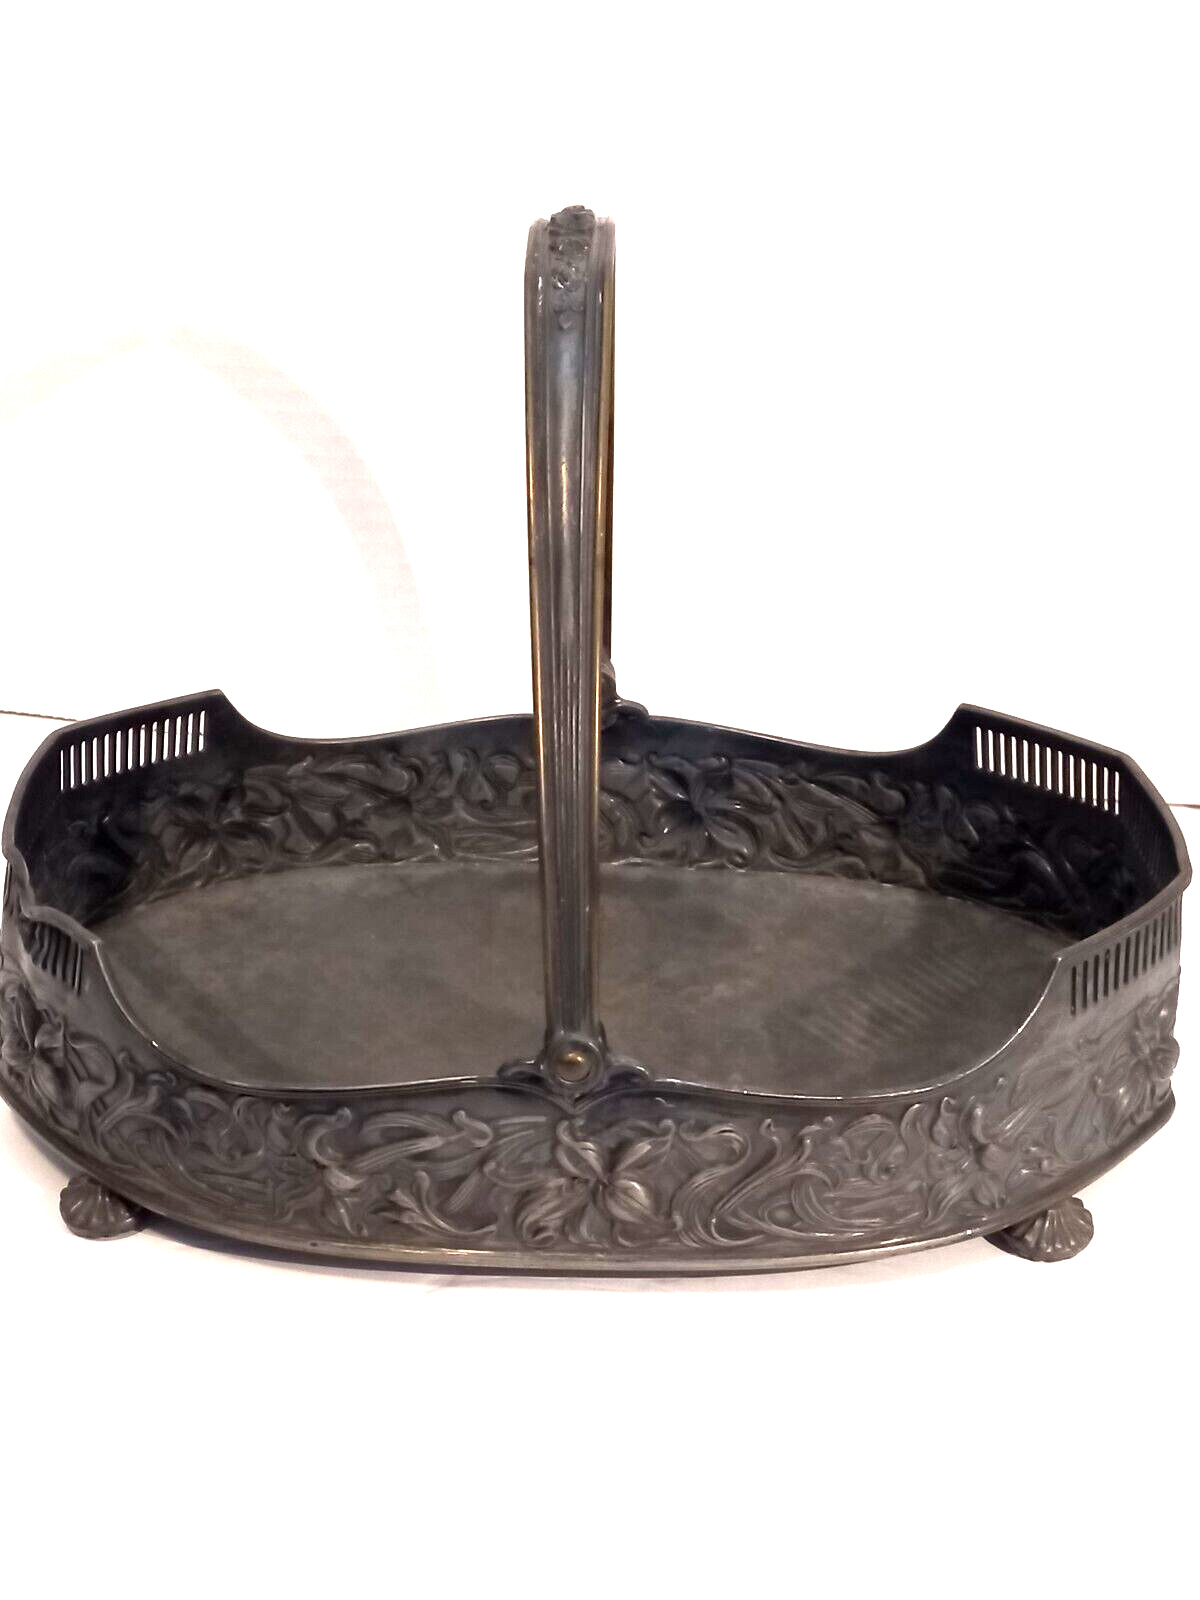 Antique Pairpoint Mfg. Co. Quadruple Silver Plate Basket